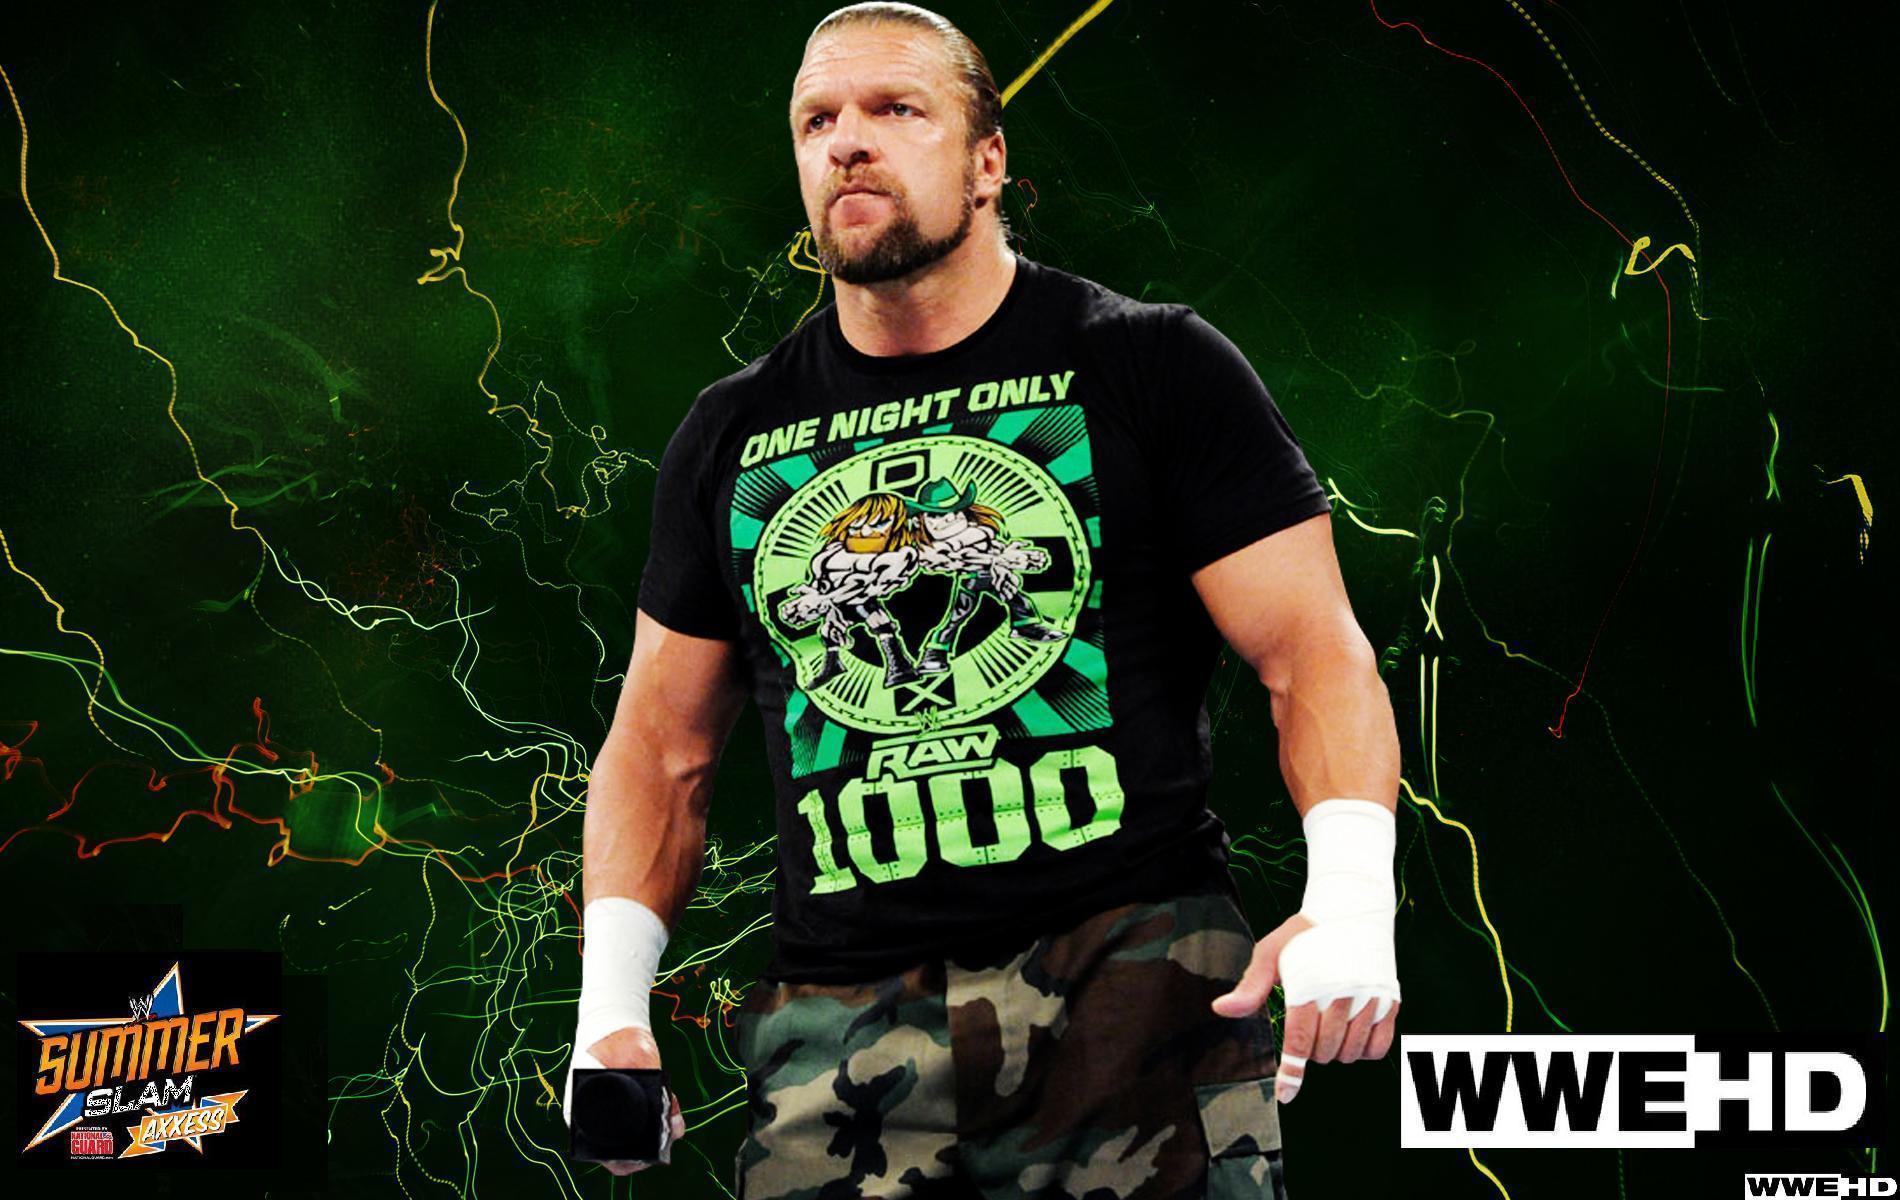 WWE Triple H Wallpaper